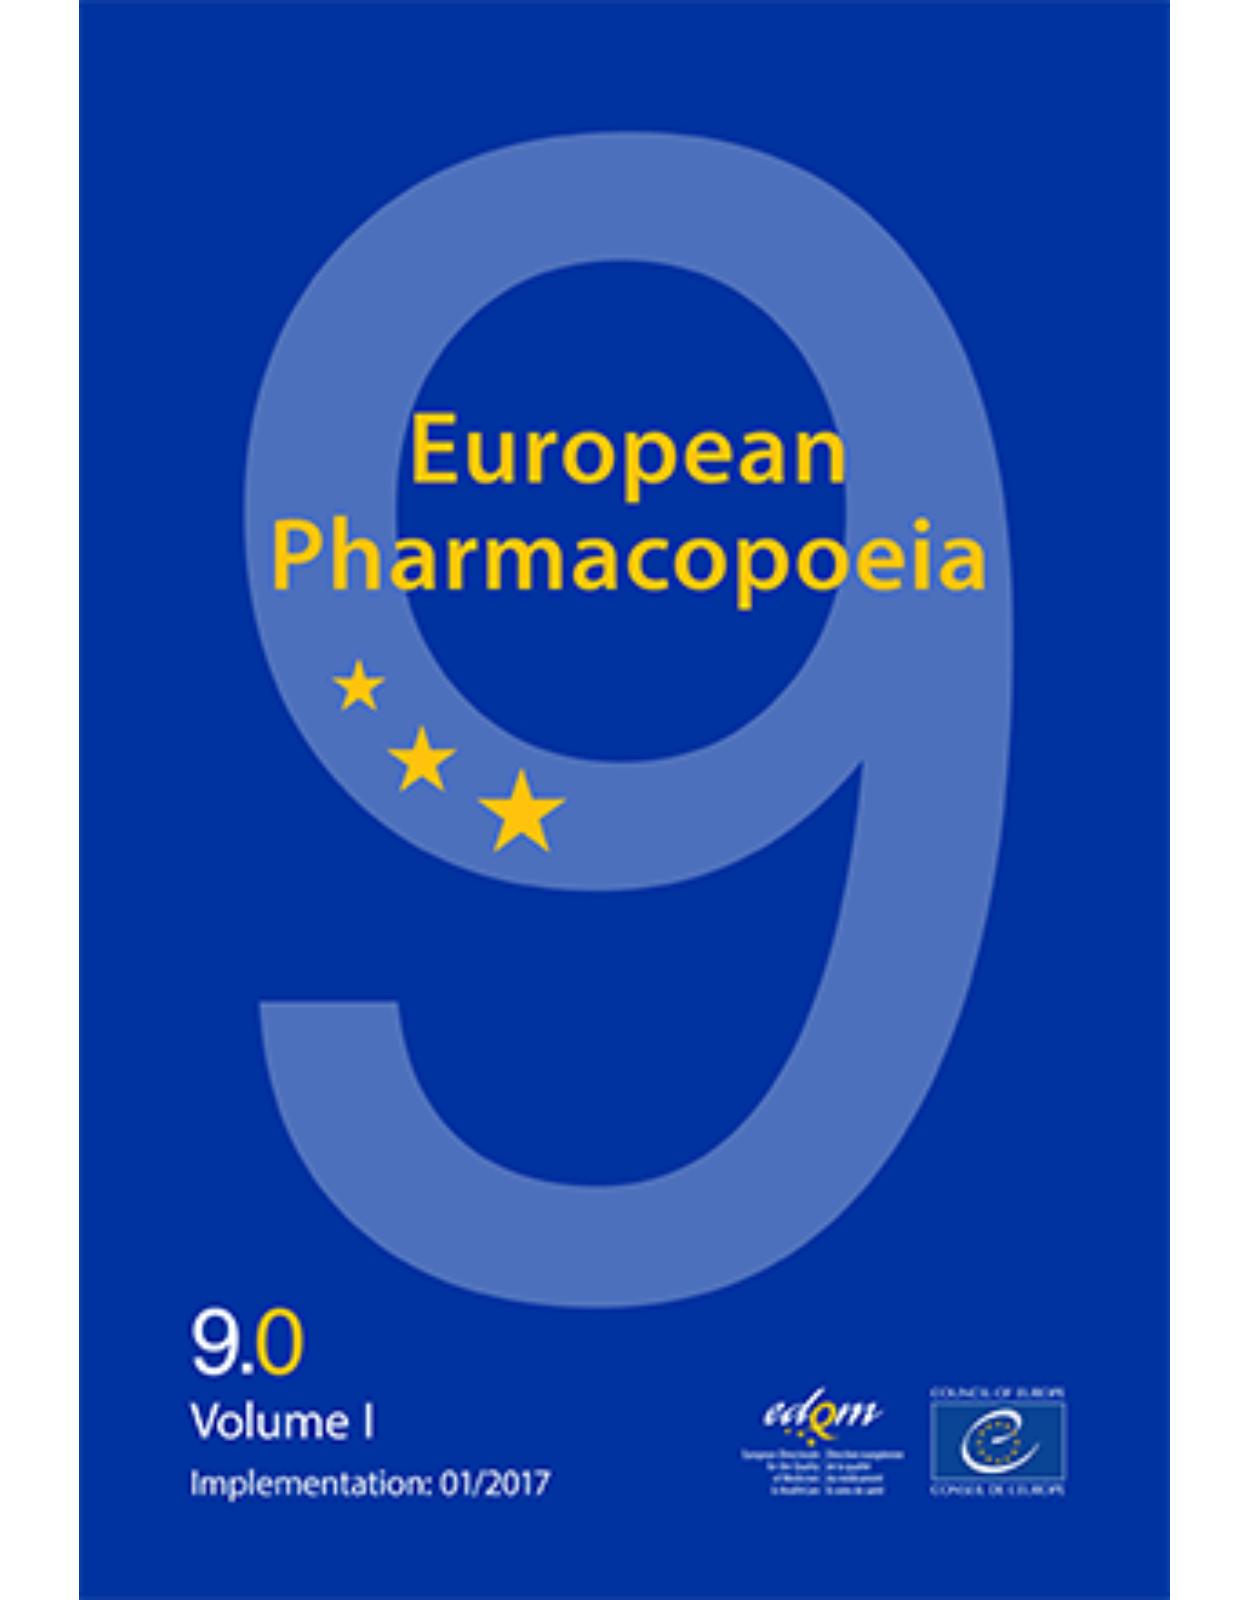 European Pharmacopoeia (Ph. Eur.) 9th Edition